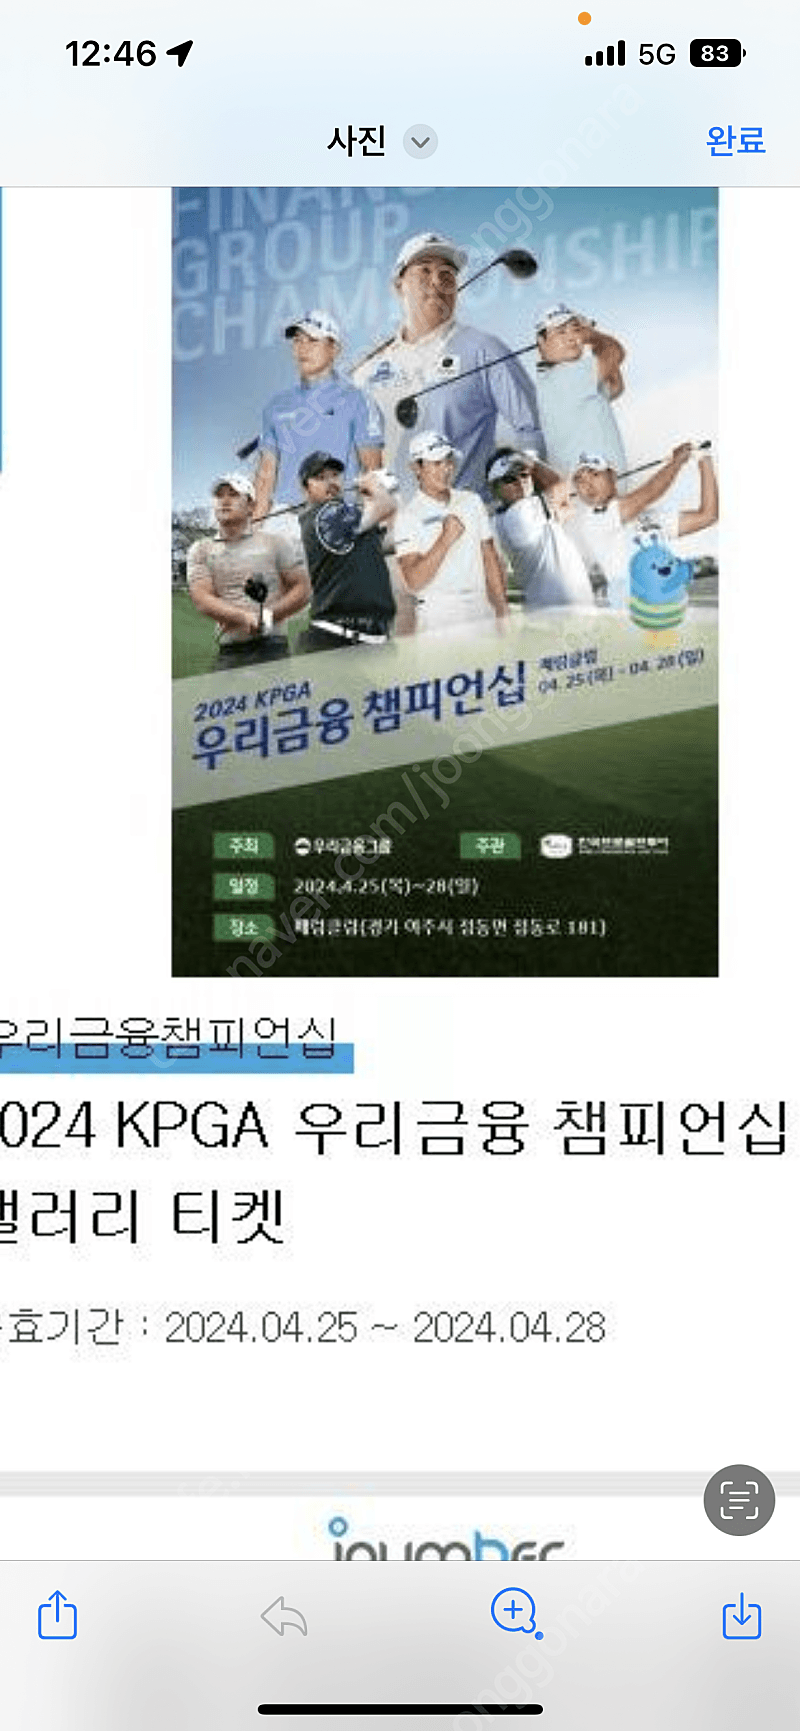 2024 KPGA 우리금융 챔피언십 갤러리티켓 2매 일괄